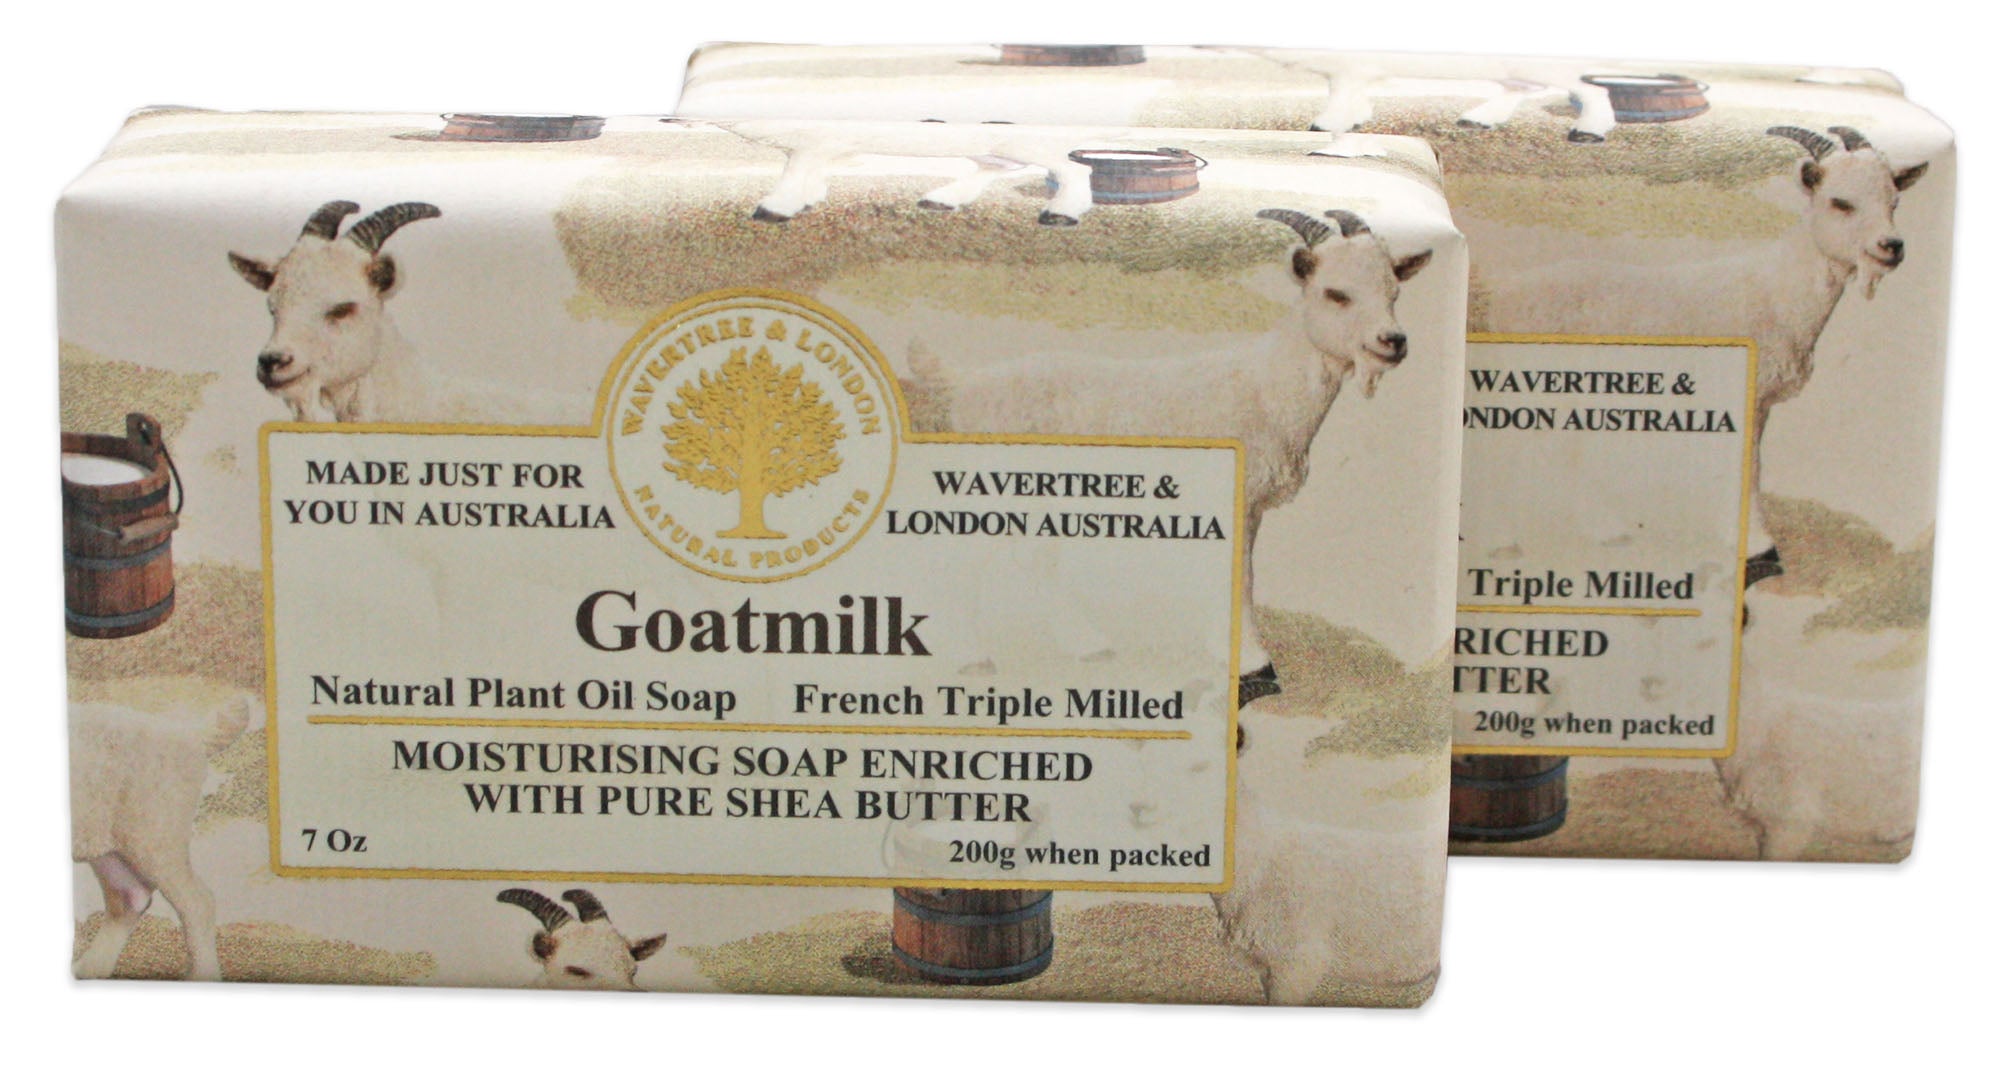 Wavertree & London Goatmilk Shea Butter Enriched Soap (2 Bars) - Long-lasting Moisturizing Experience